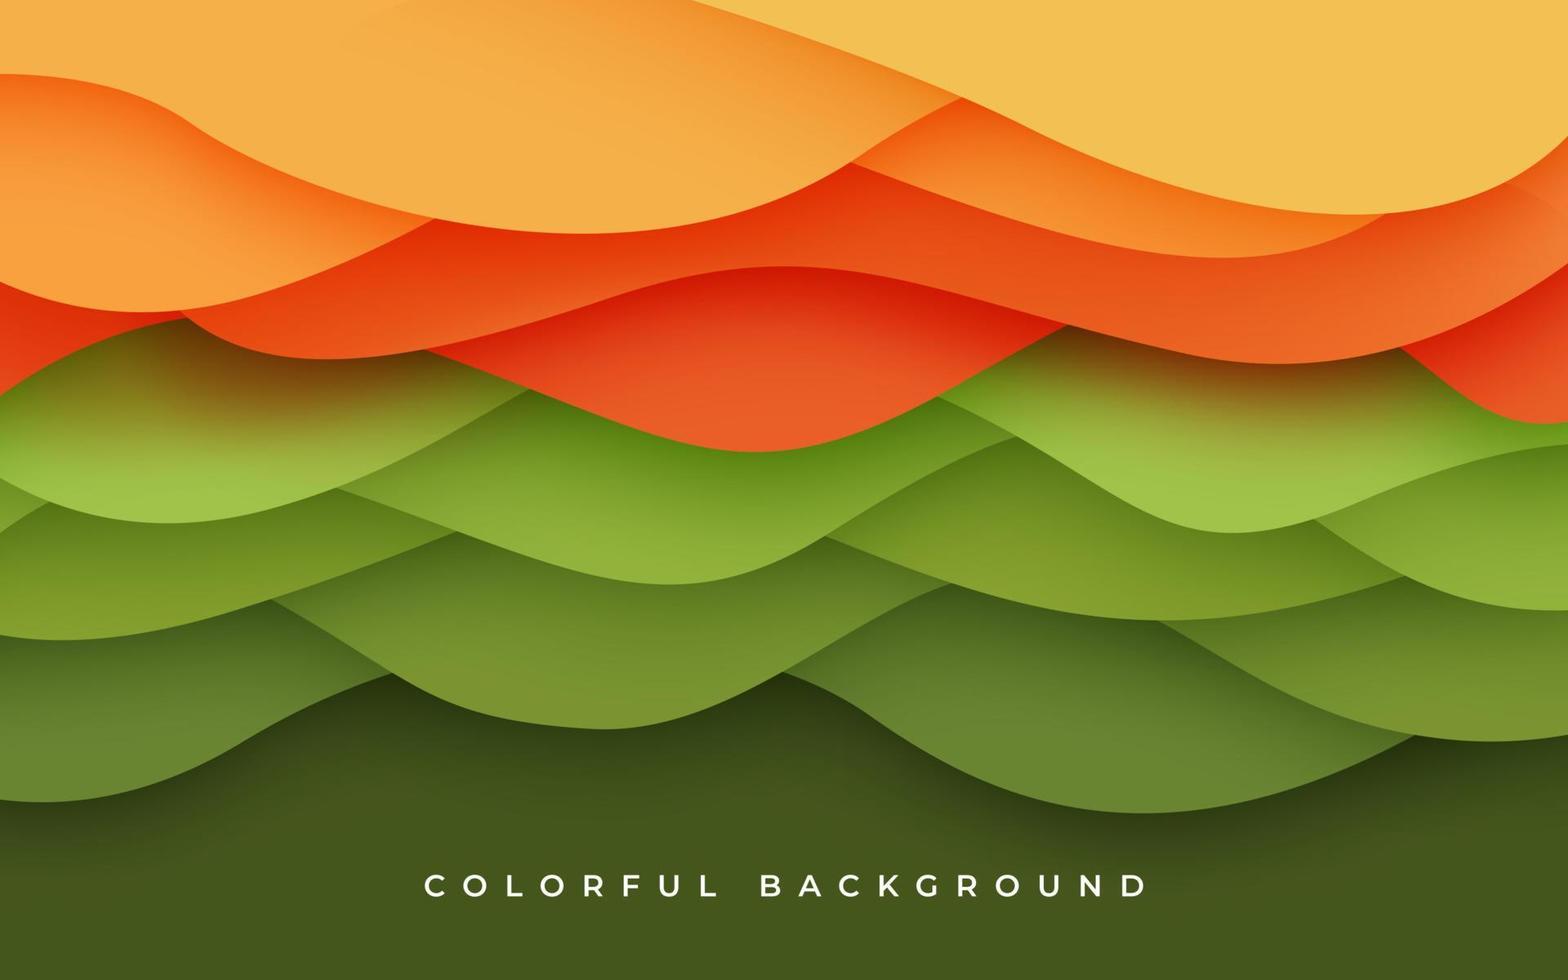 abstrakt färgrik gul, grön, orange dynamisk vågig skikten papperssår stil bakgrund. eps10 vektor